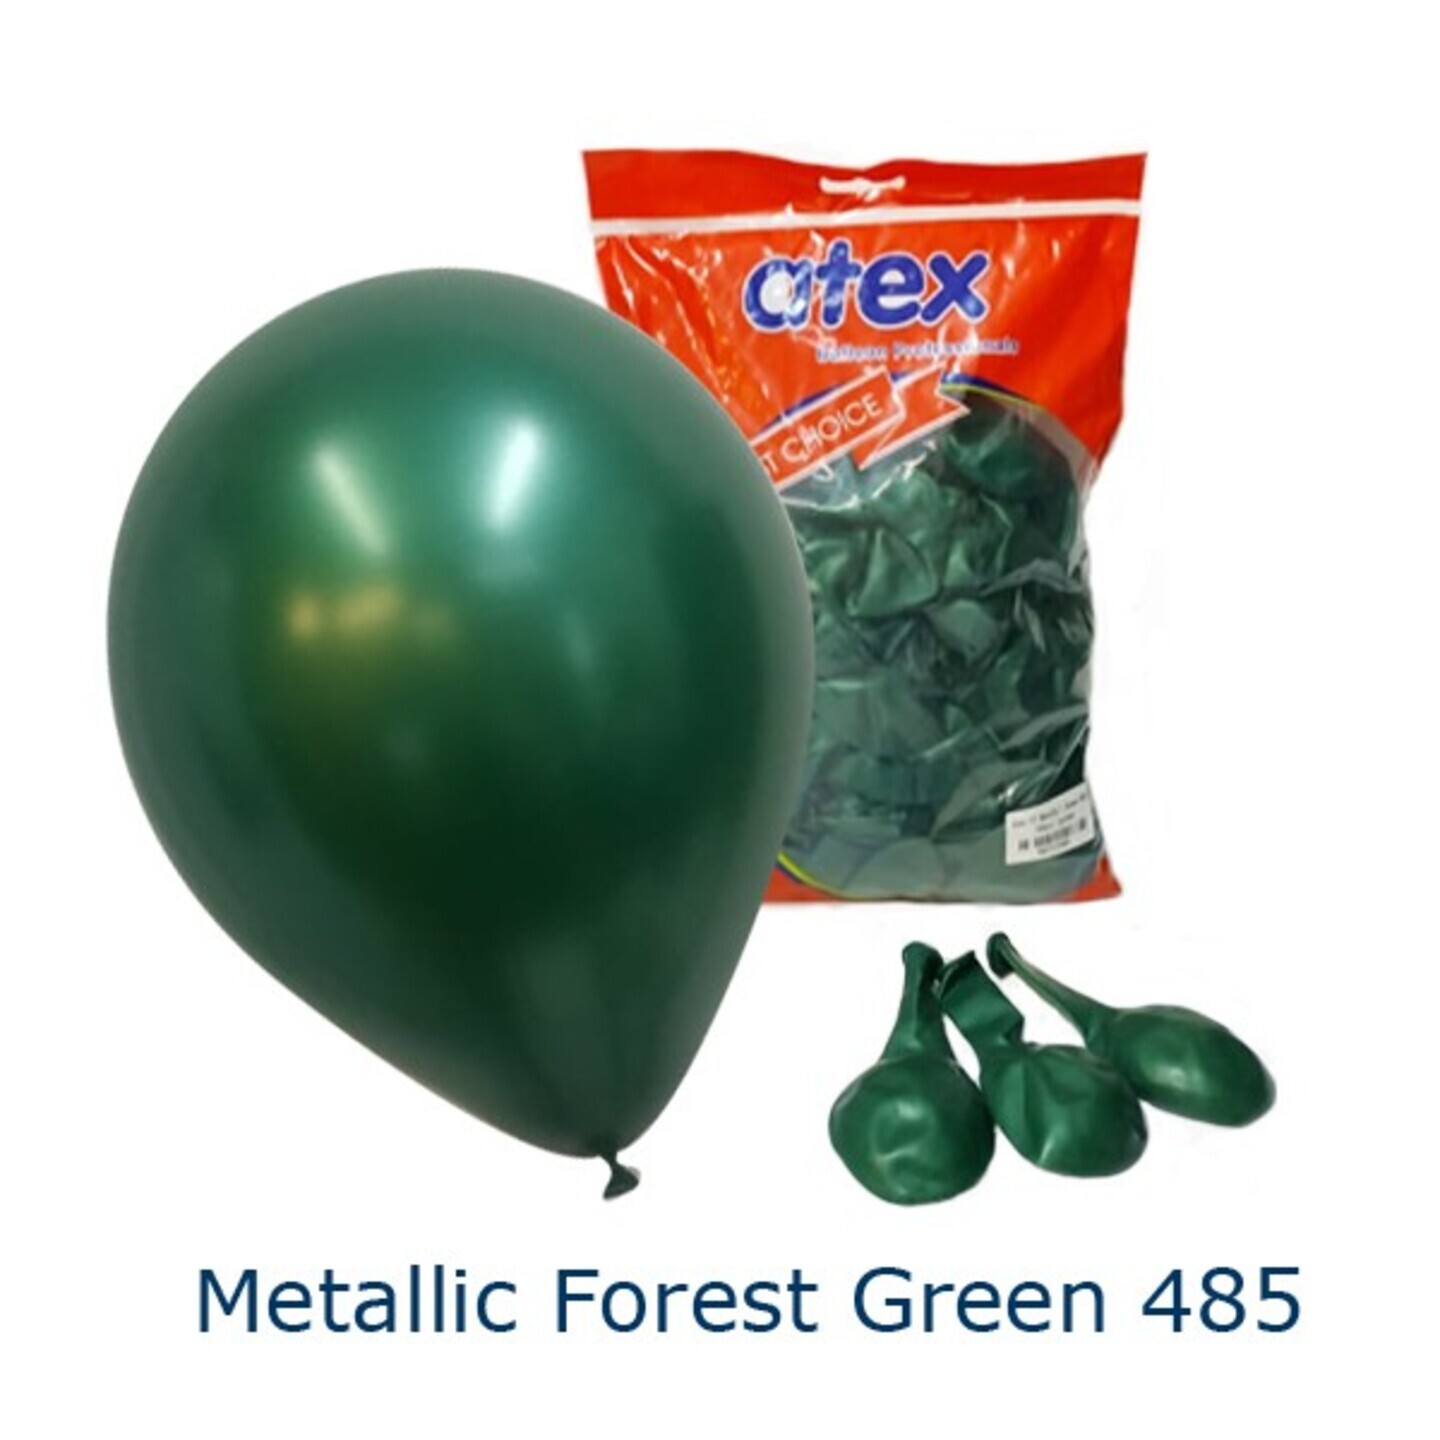 Metallic Forest Green 485